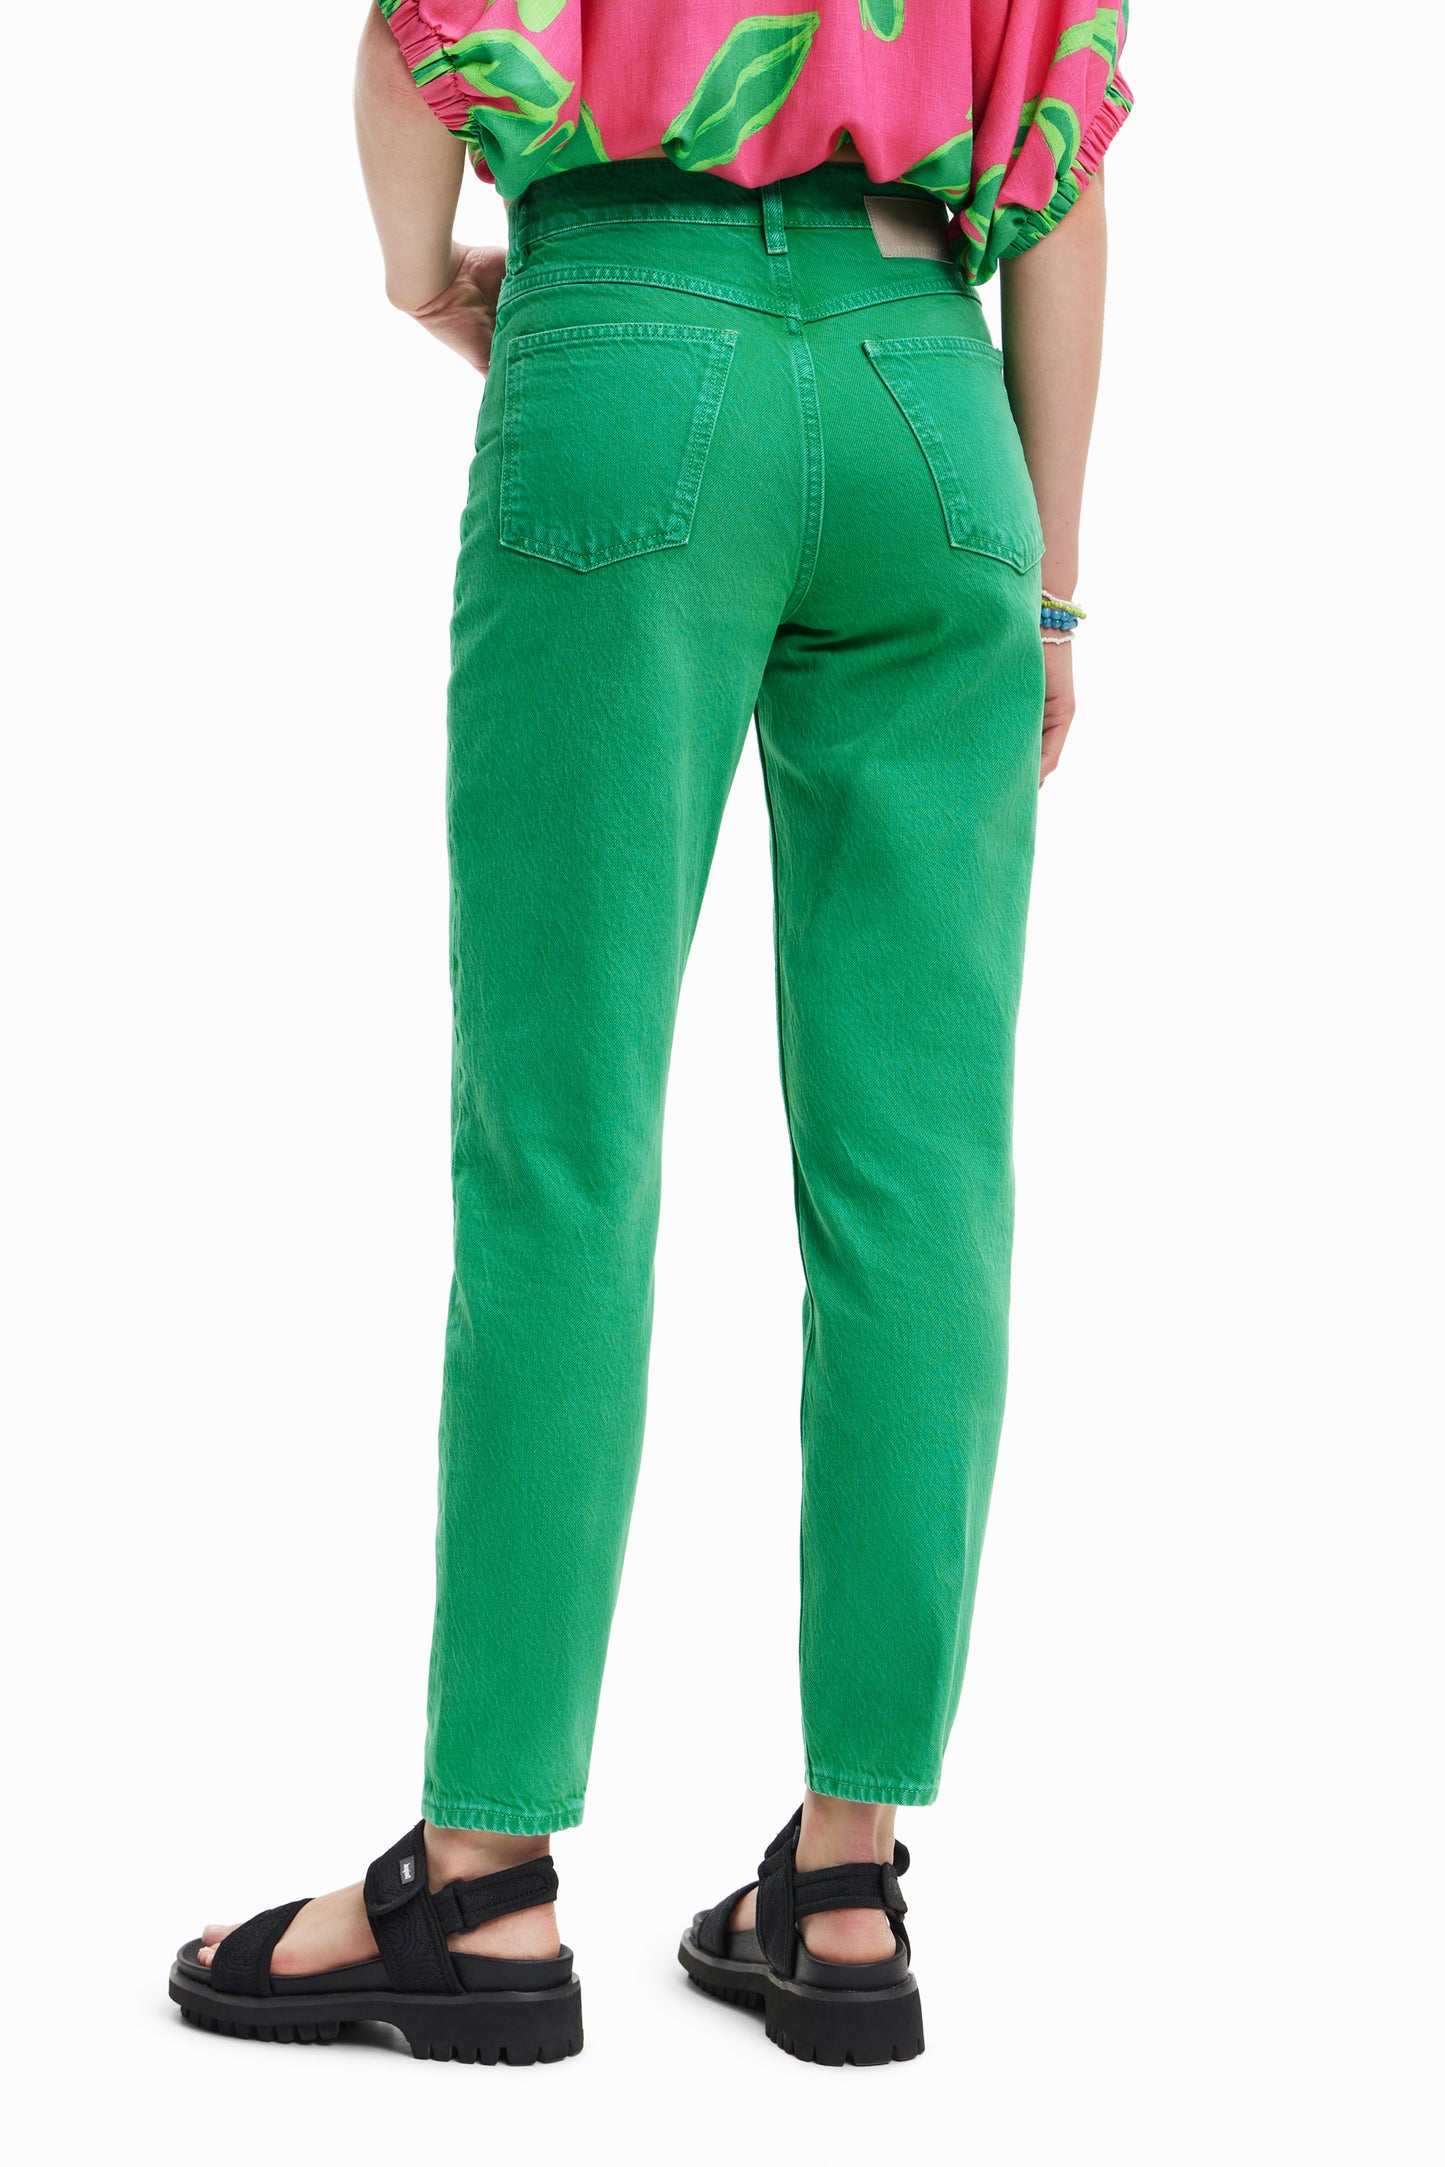 Desigual-jeans-green-back